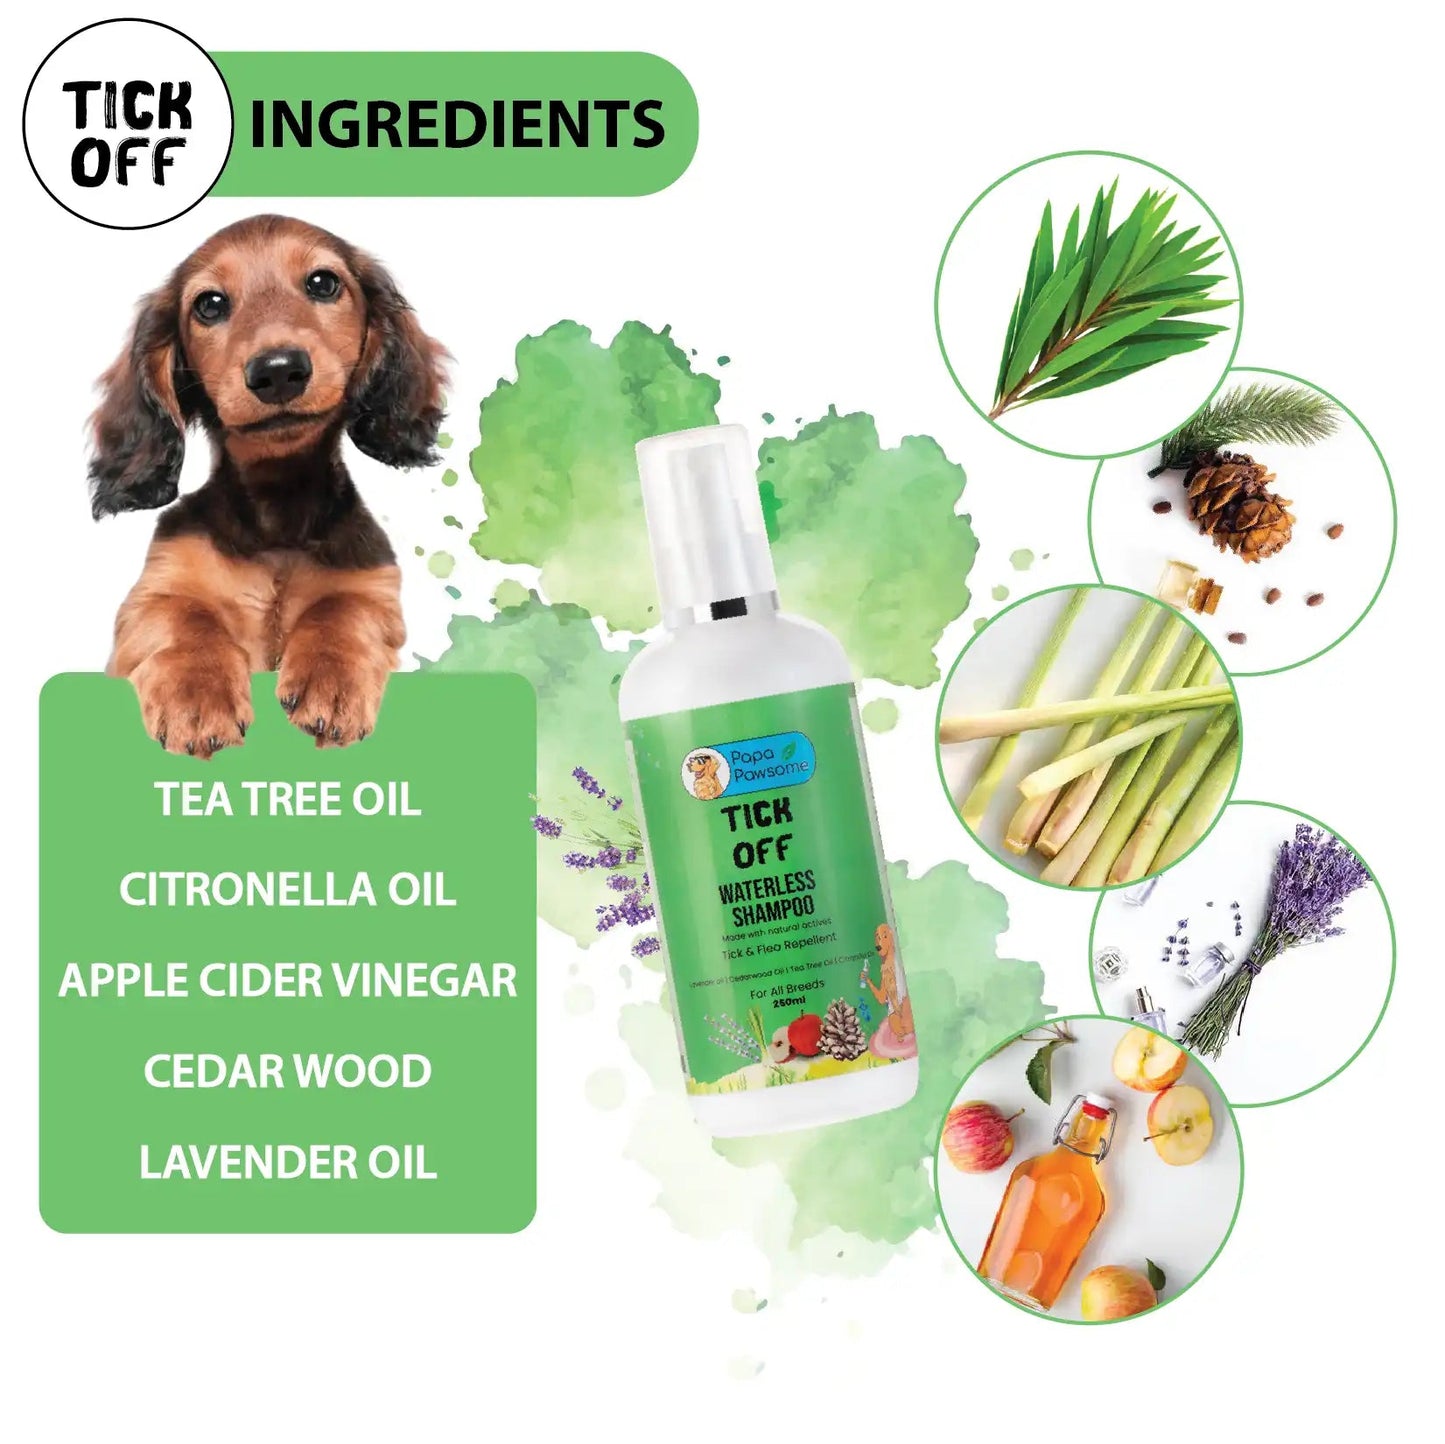 Key ingredients: Tea Tree Oil, Citronella Oil, Apple Cider Vinegar, Cedarwood, Lavender Oil